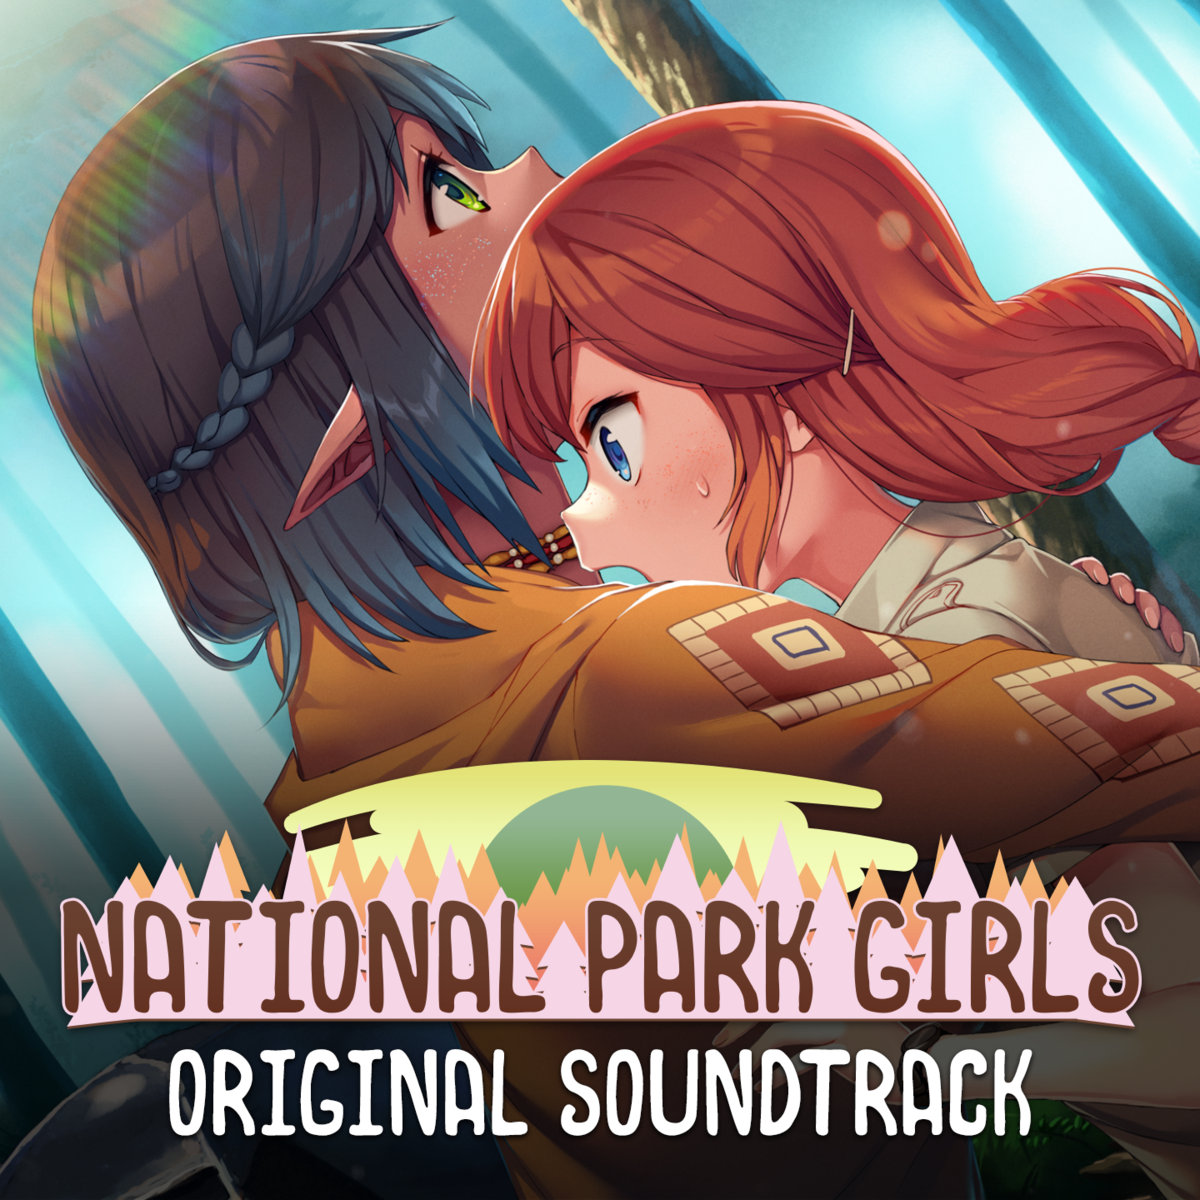 Girl soundtrack. National Park girls. Girls OST. Assault girls Soundtrack.